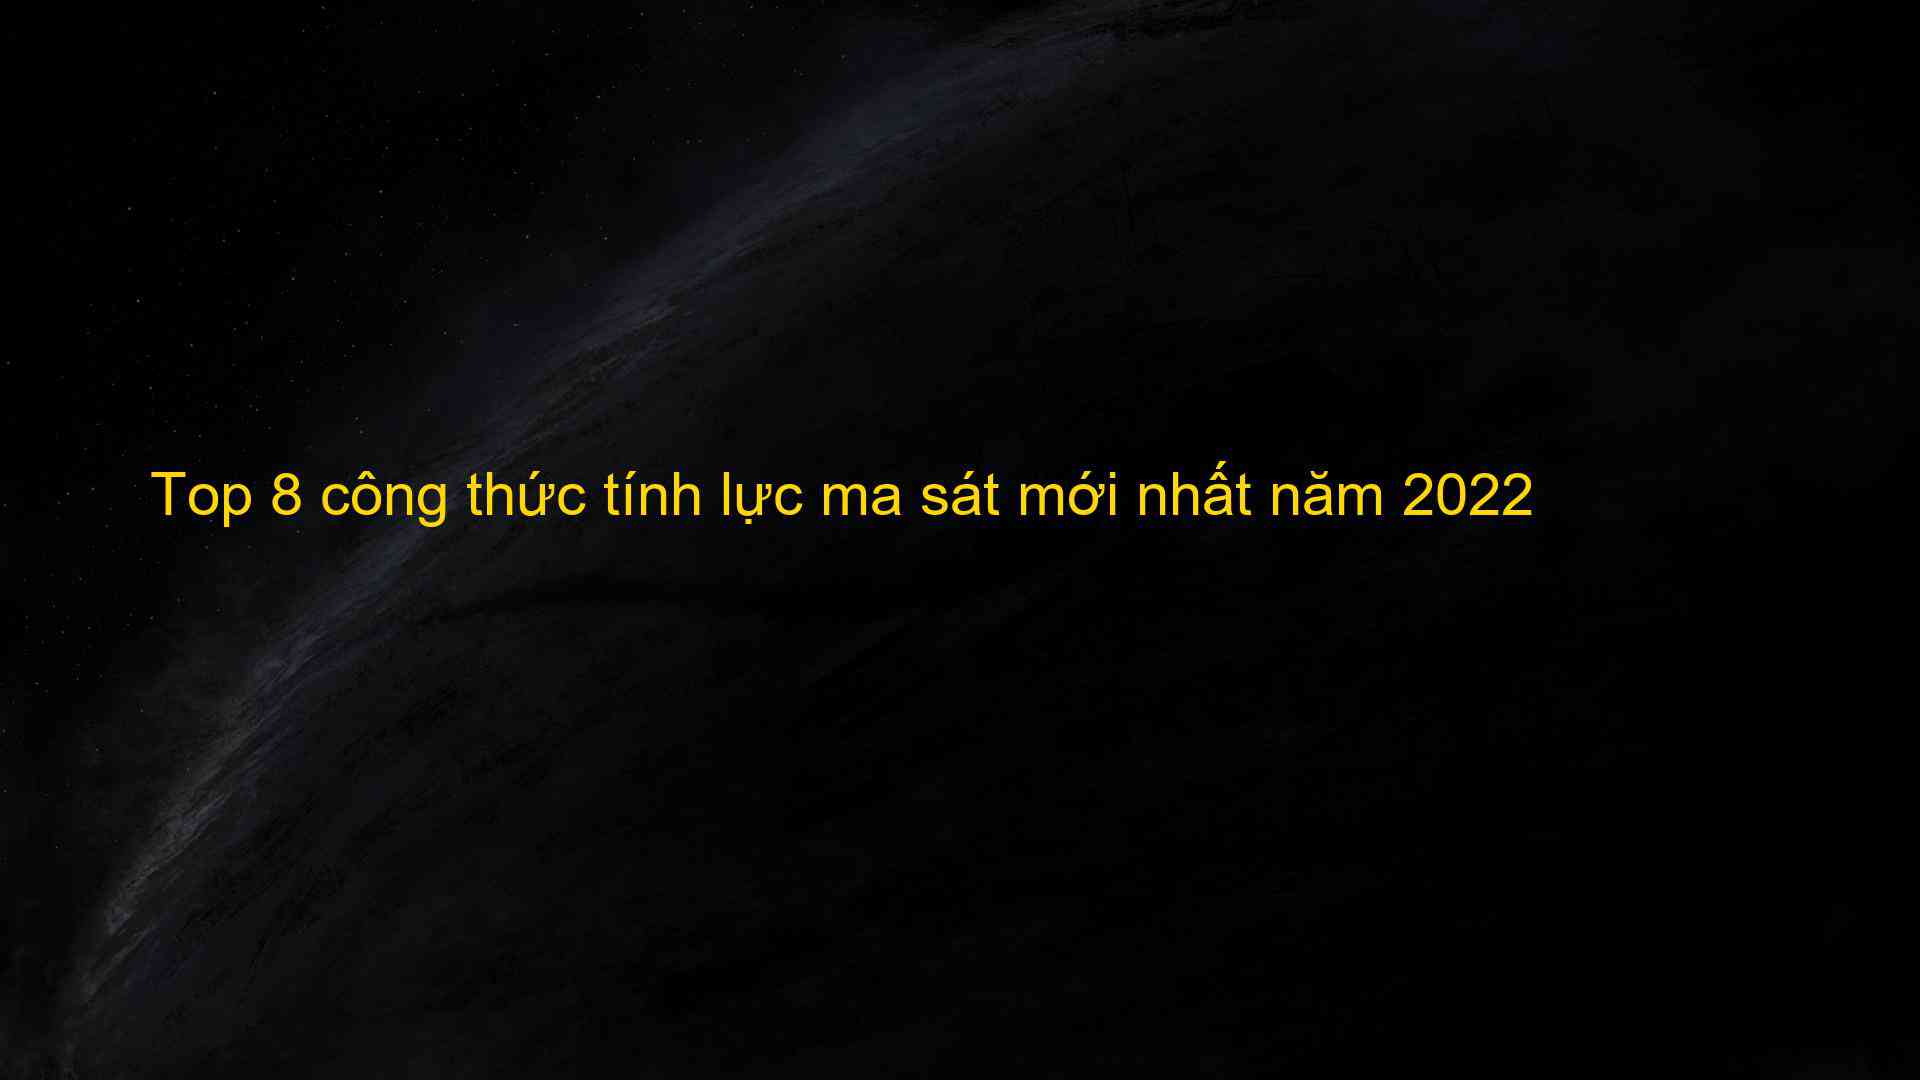 Top 8 cong thuc tinh luc ma sat moi nhat nam 2022 1659746596